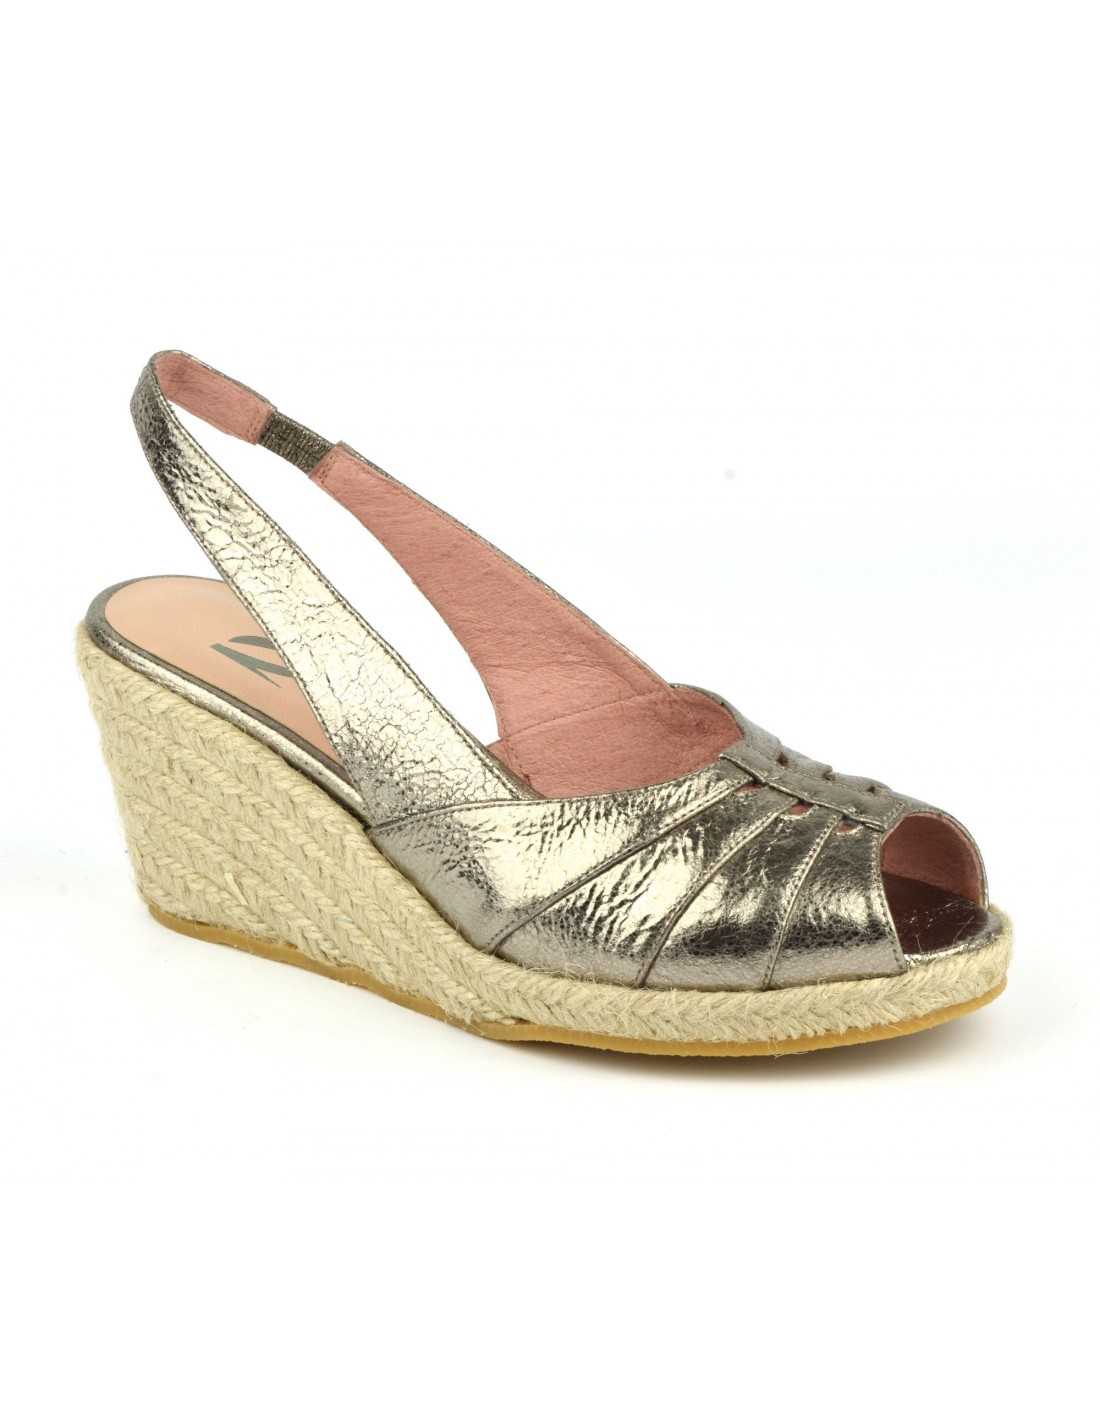 Wedge sandals, gold metallic leather, ZC0303J, Zoo Calzados